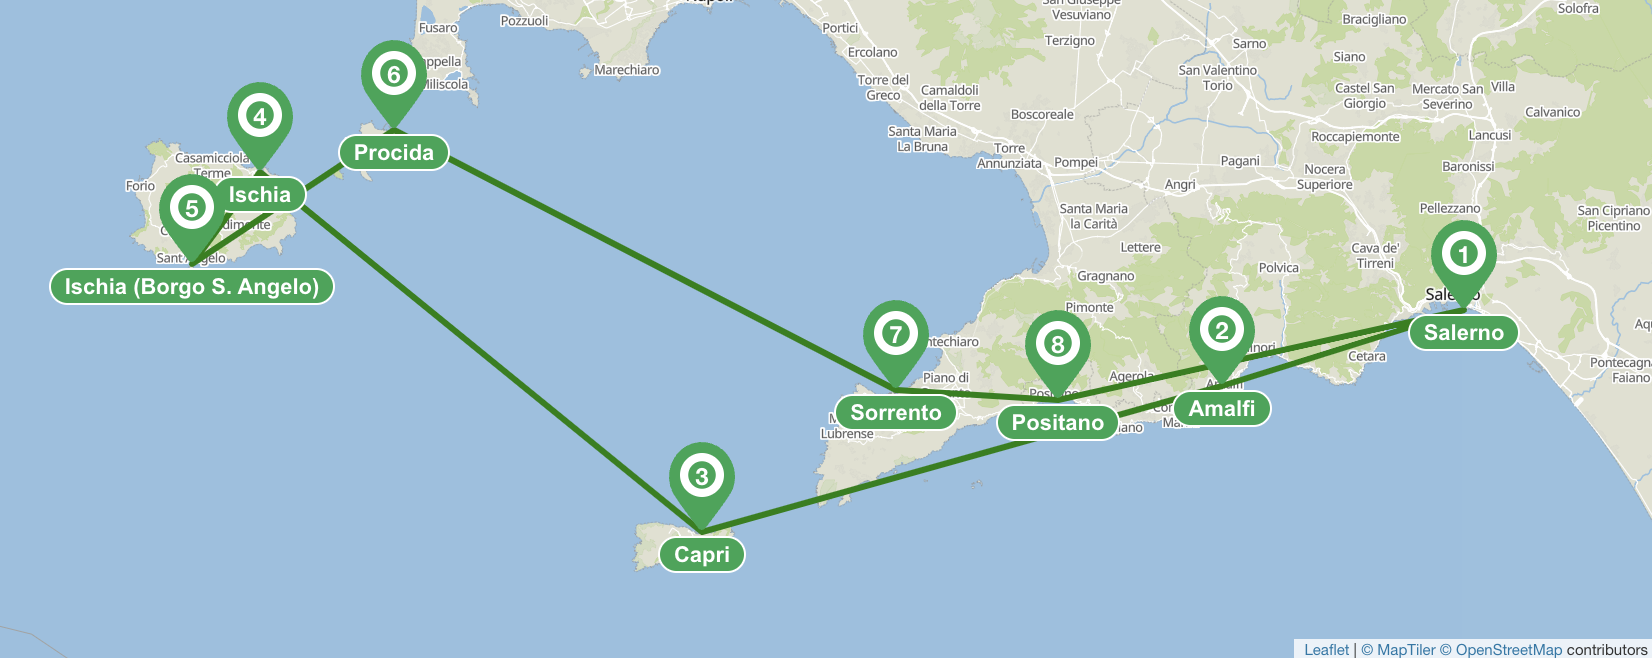 Itinerario en velero de 7 días por la costa amalfitana